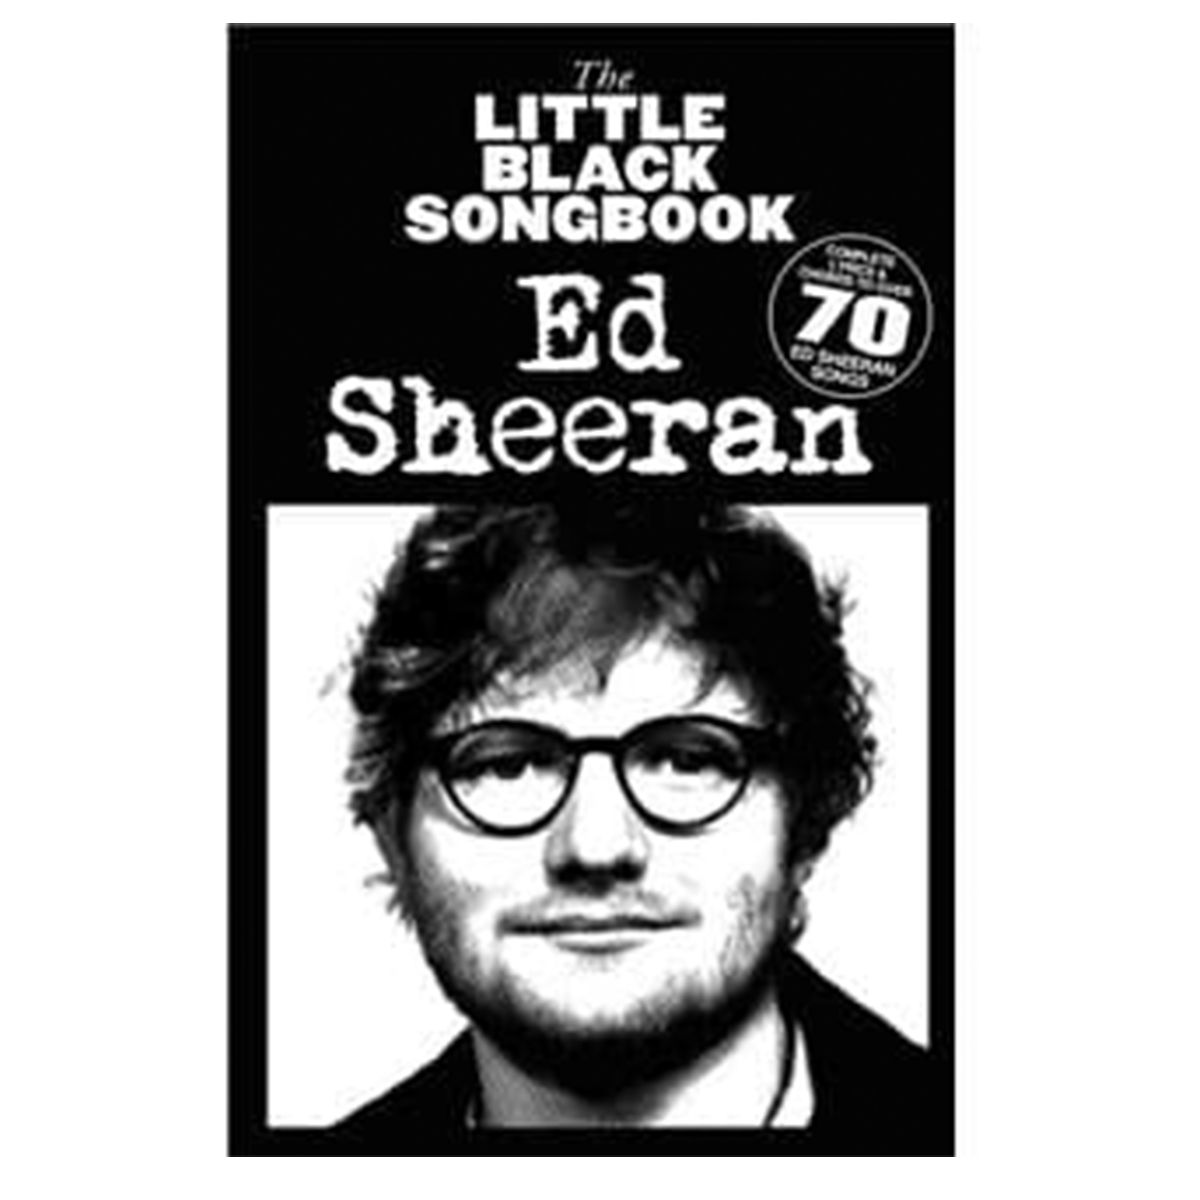 THE LITTLE BLACK SONGBOOK: Ed Sheeran